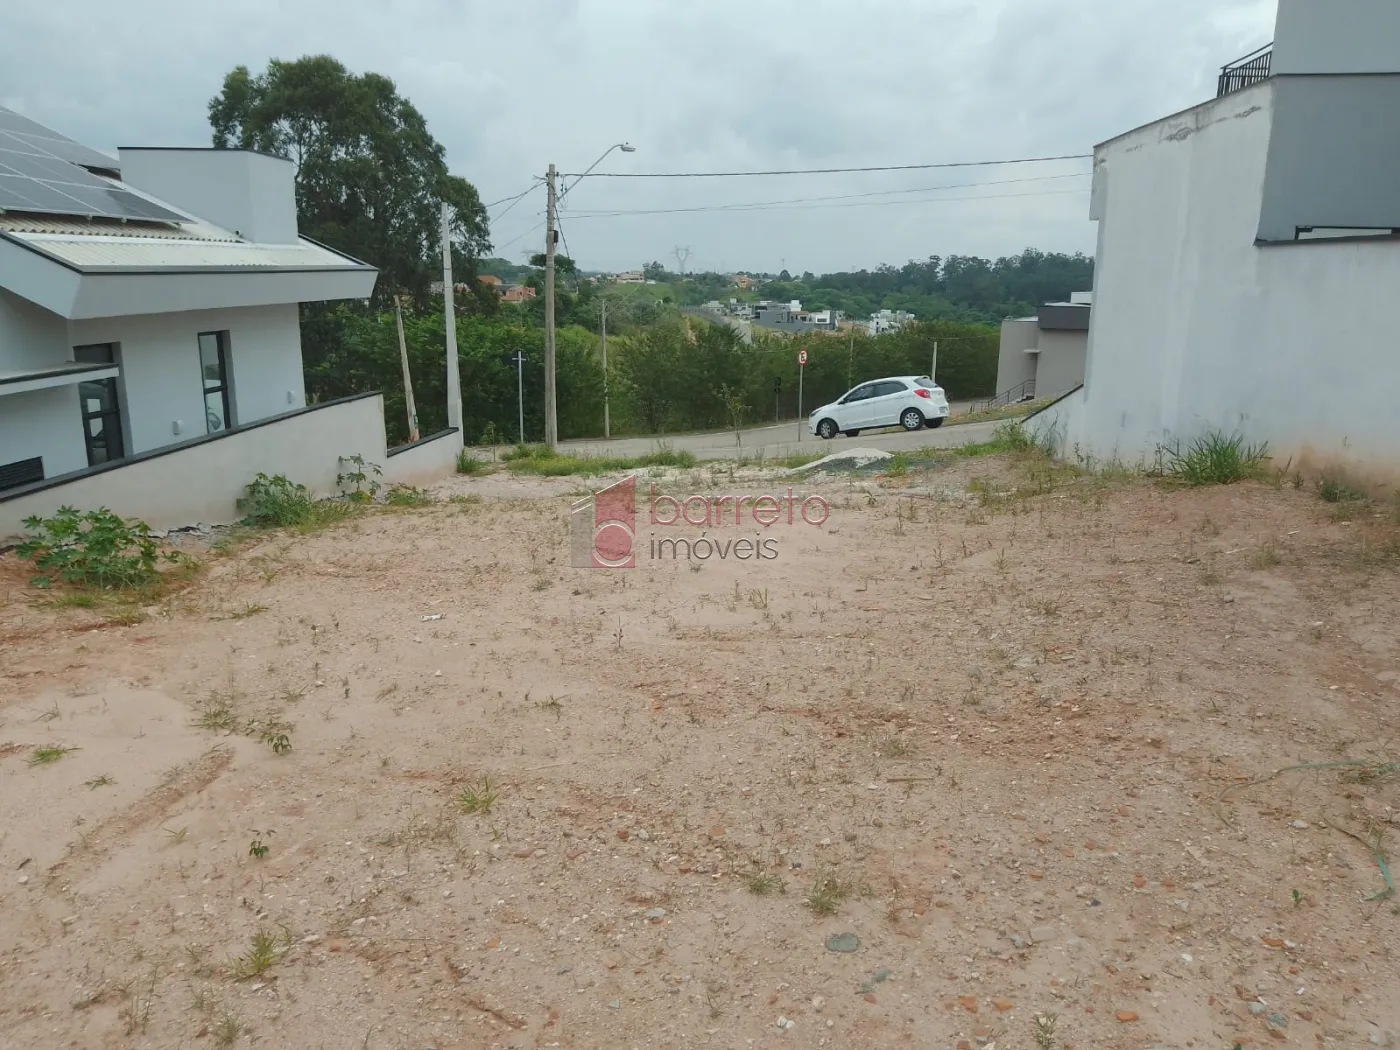 Comprar Terreno / Condomínio em Jundiaí R$ 425.000,00 - Foto 1